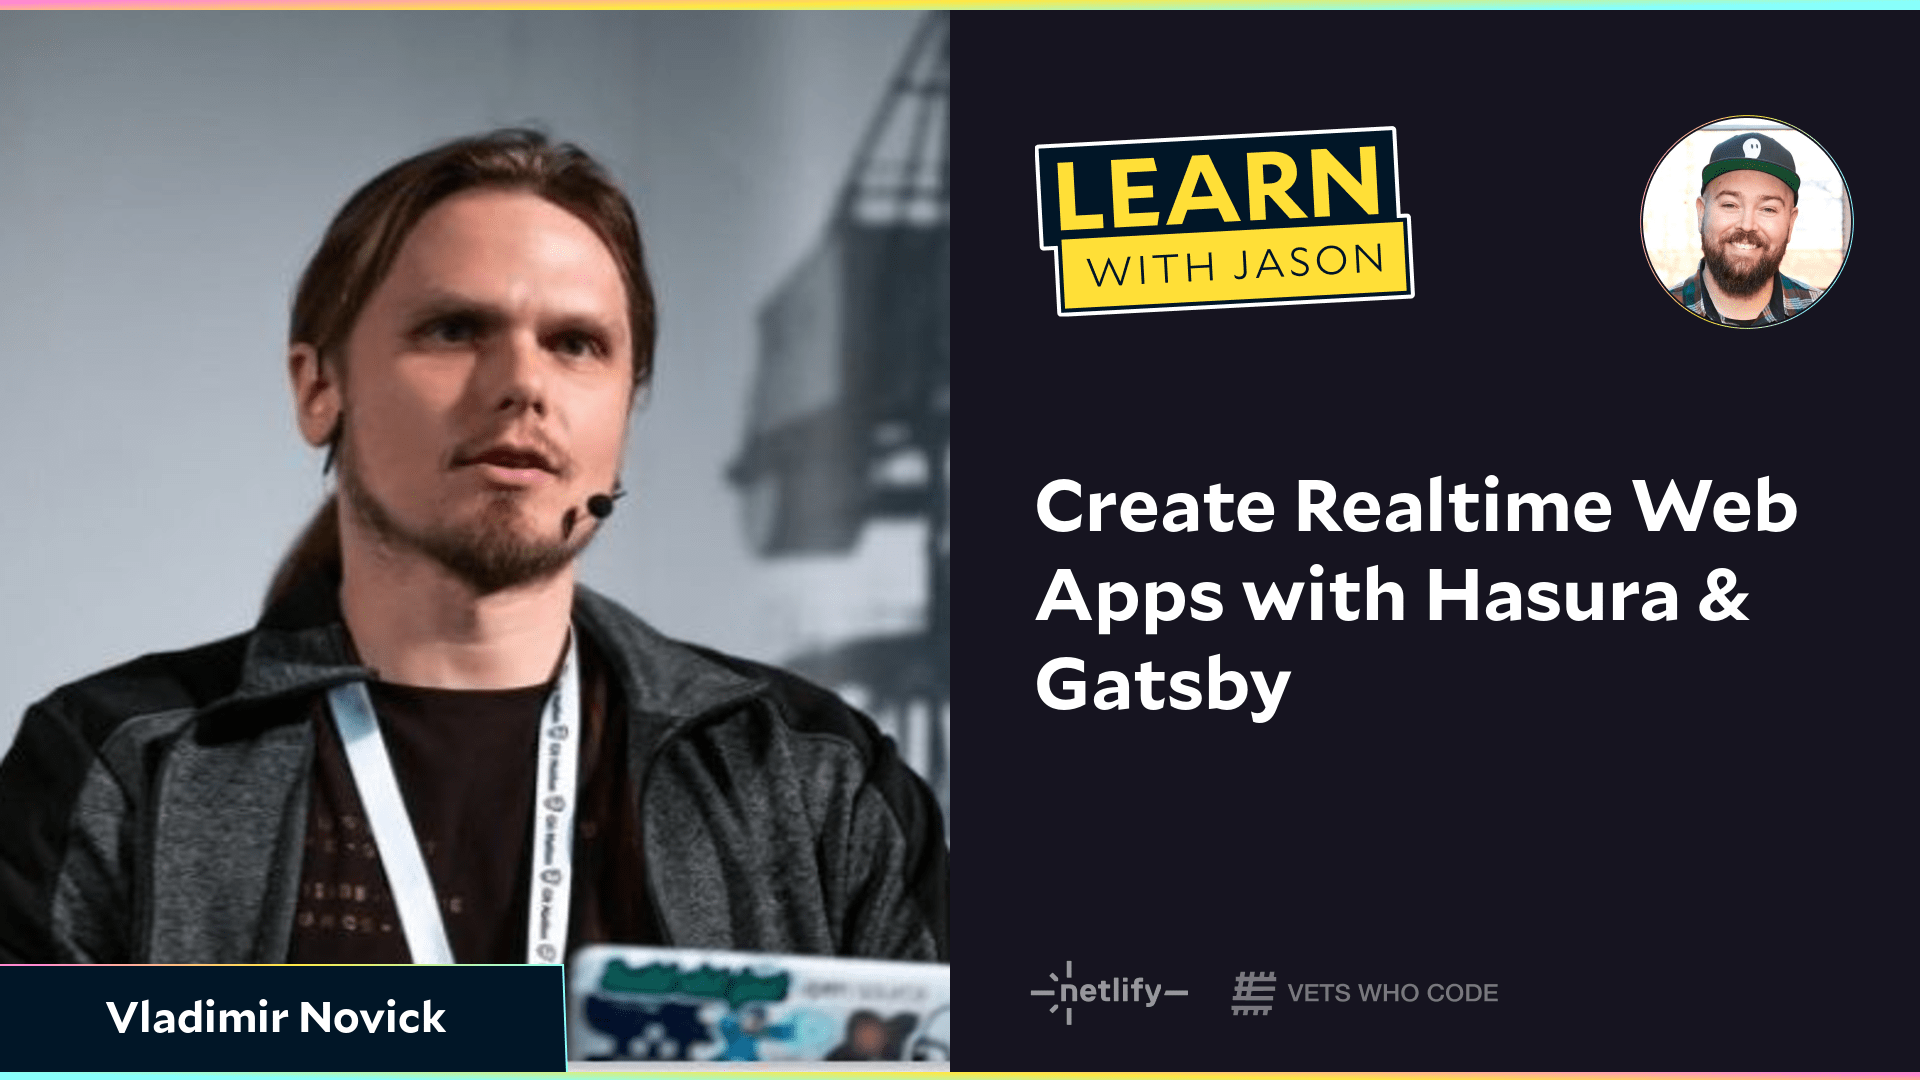 Create Realtime Web Apps with Hasura & Gatsby (with Vladimir Novick)